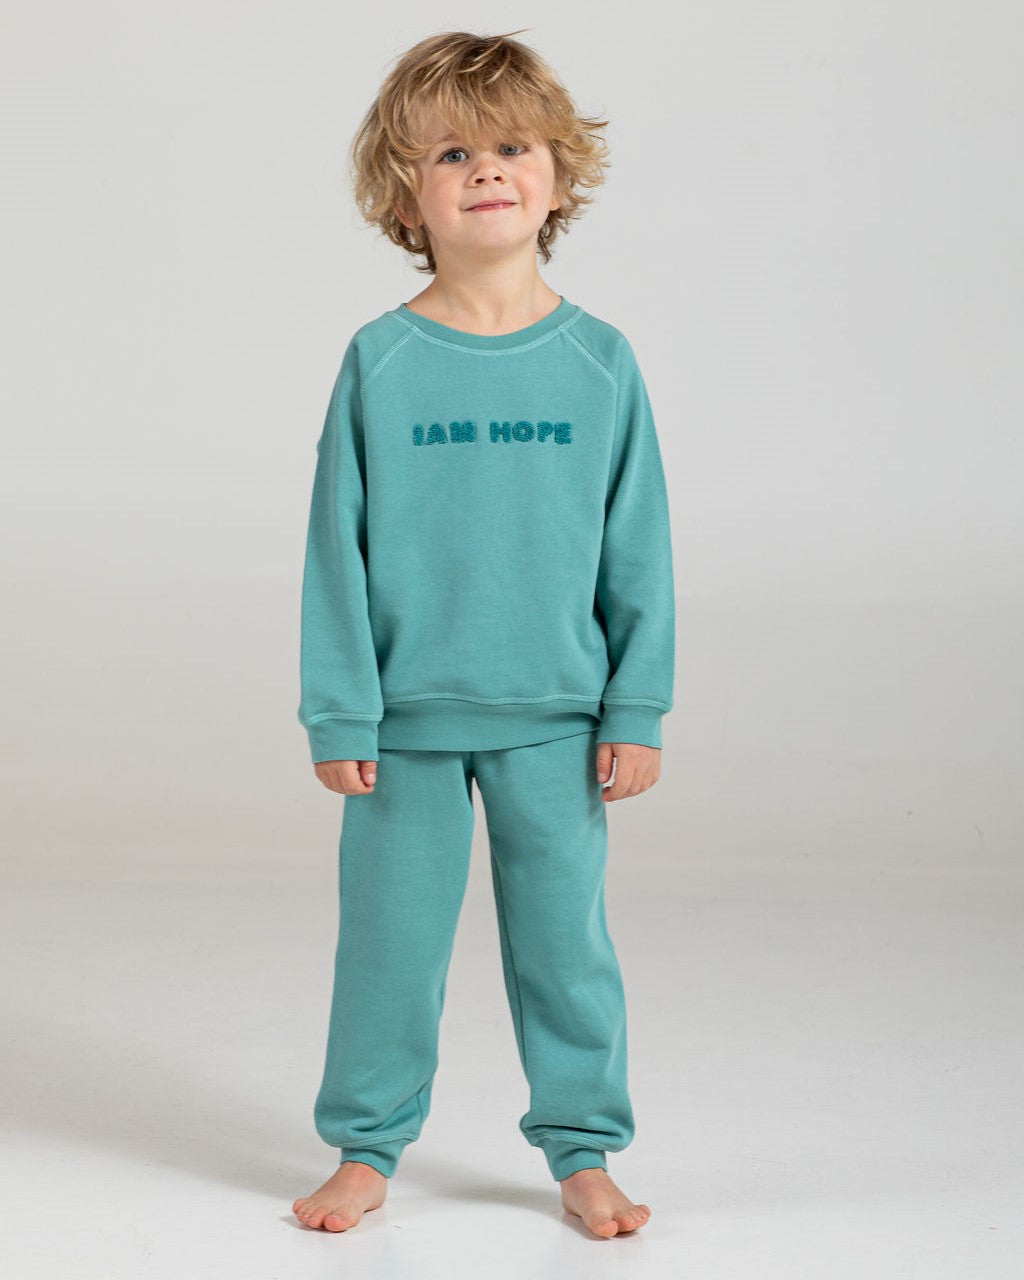 HOPE Sweatpants Kids (turquoise)